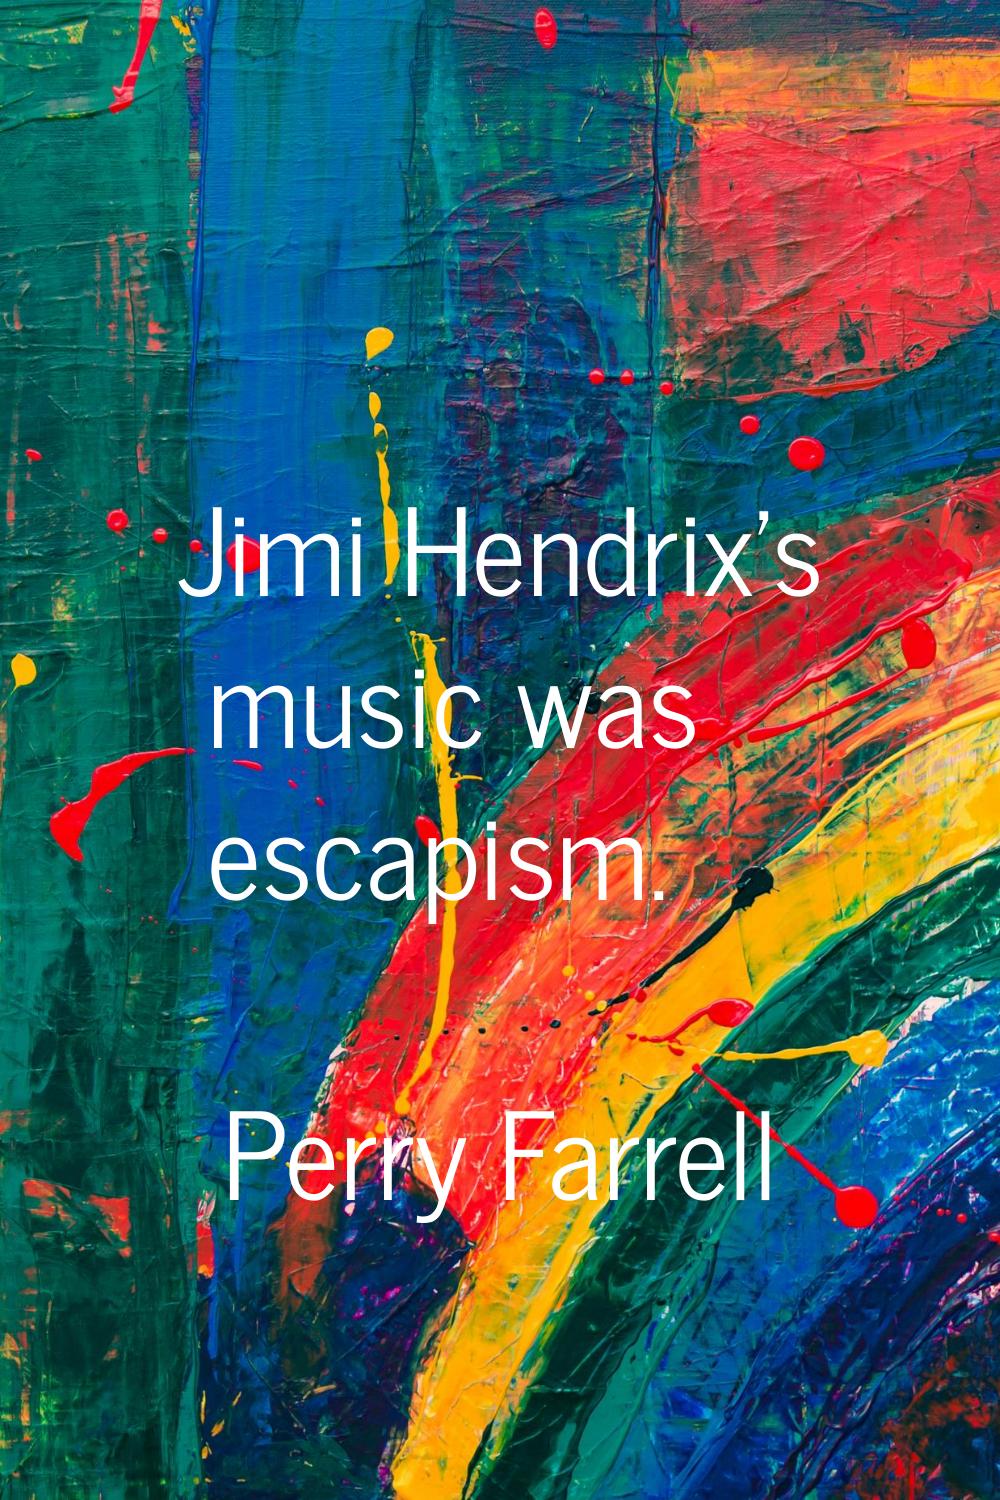 Jimi Hendrix's music was escapism.